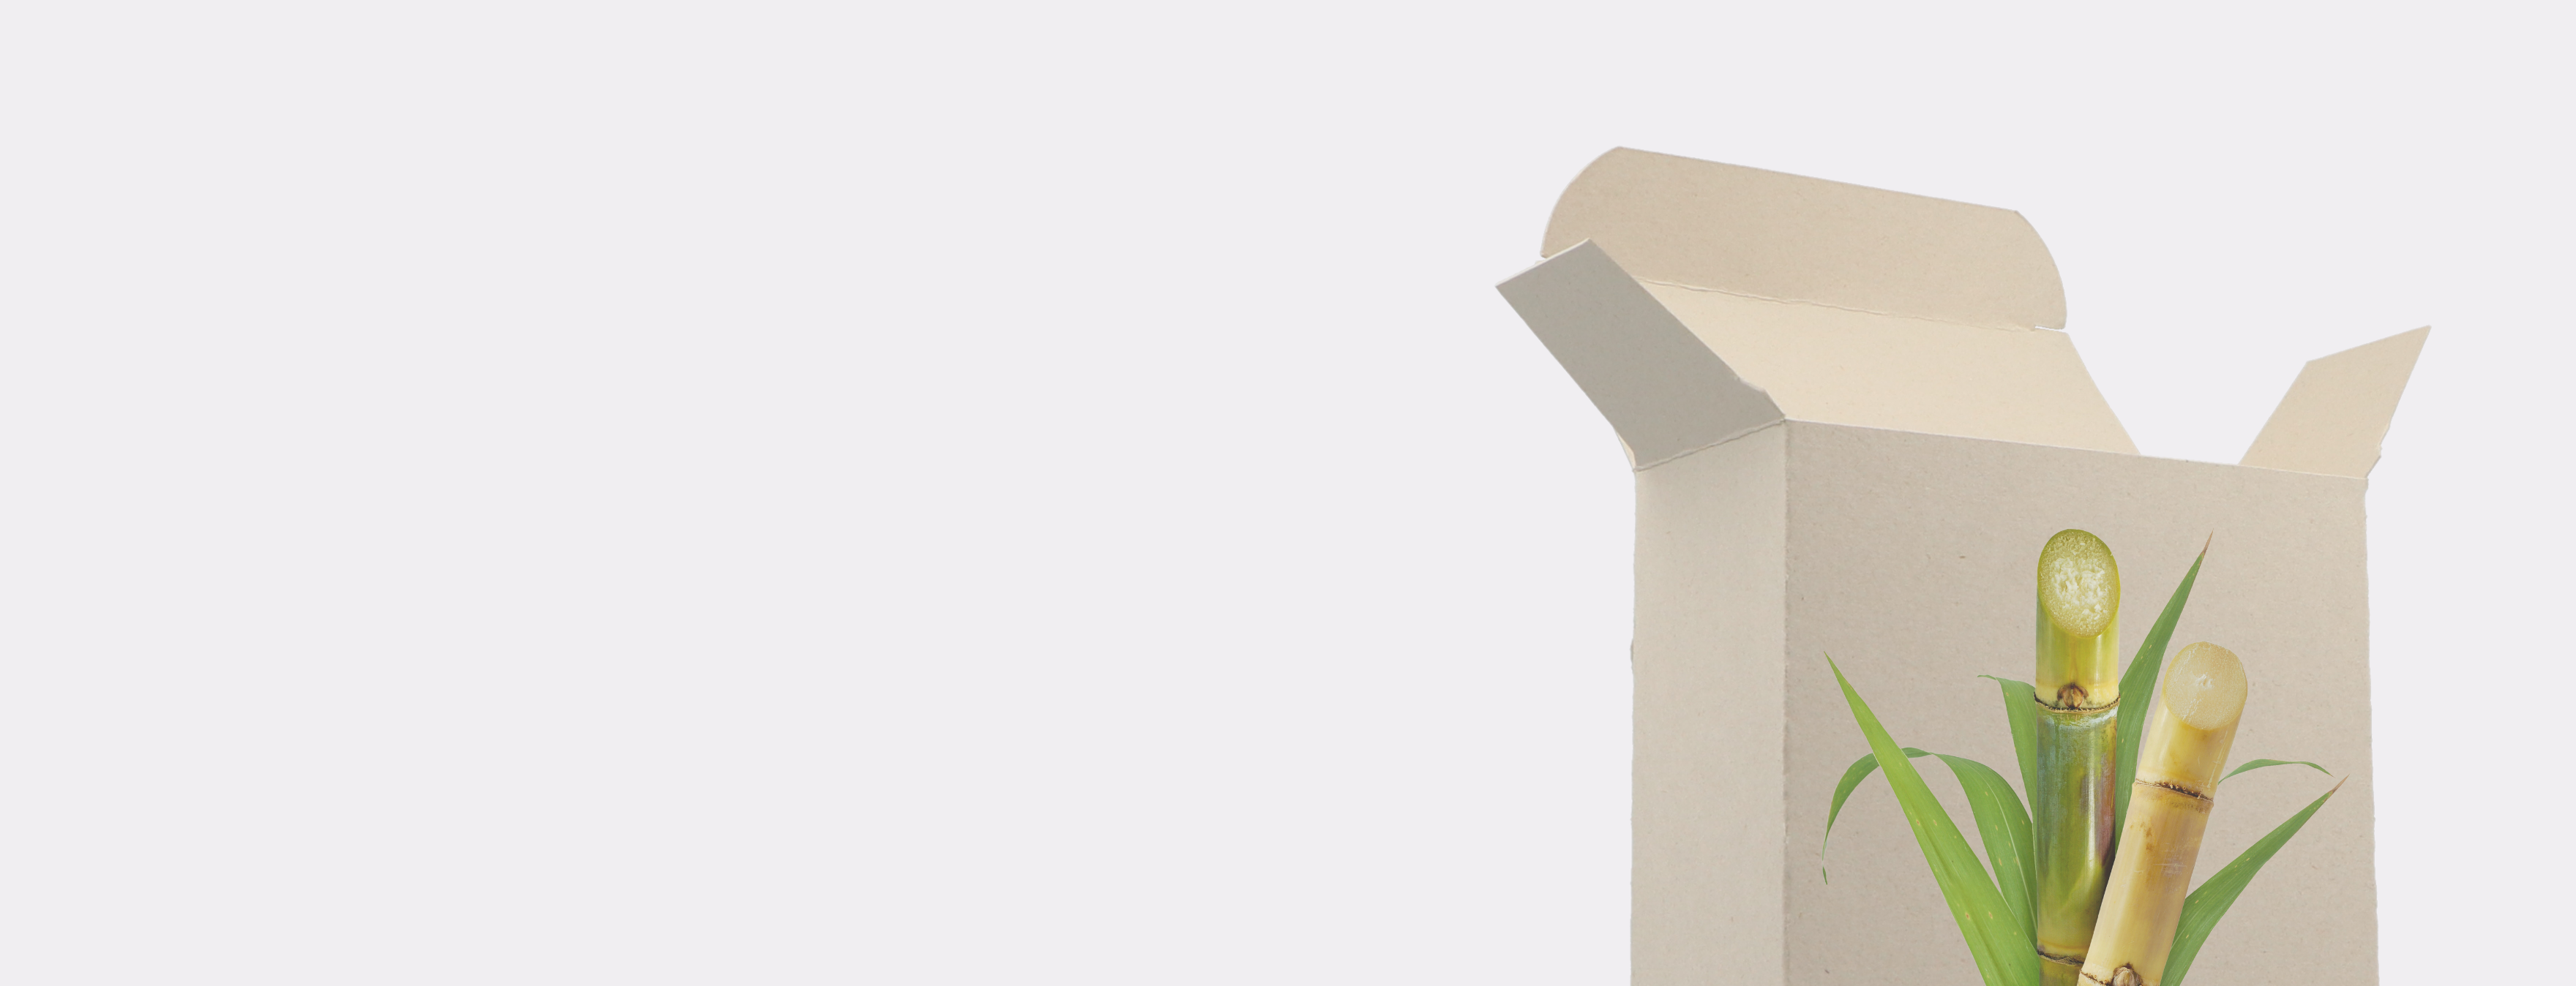 Cardboard Folding Box: Sustainable Packaging Made from Sugarcane Cardboard